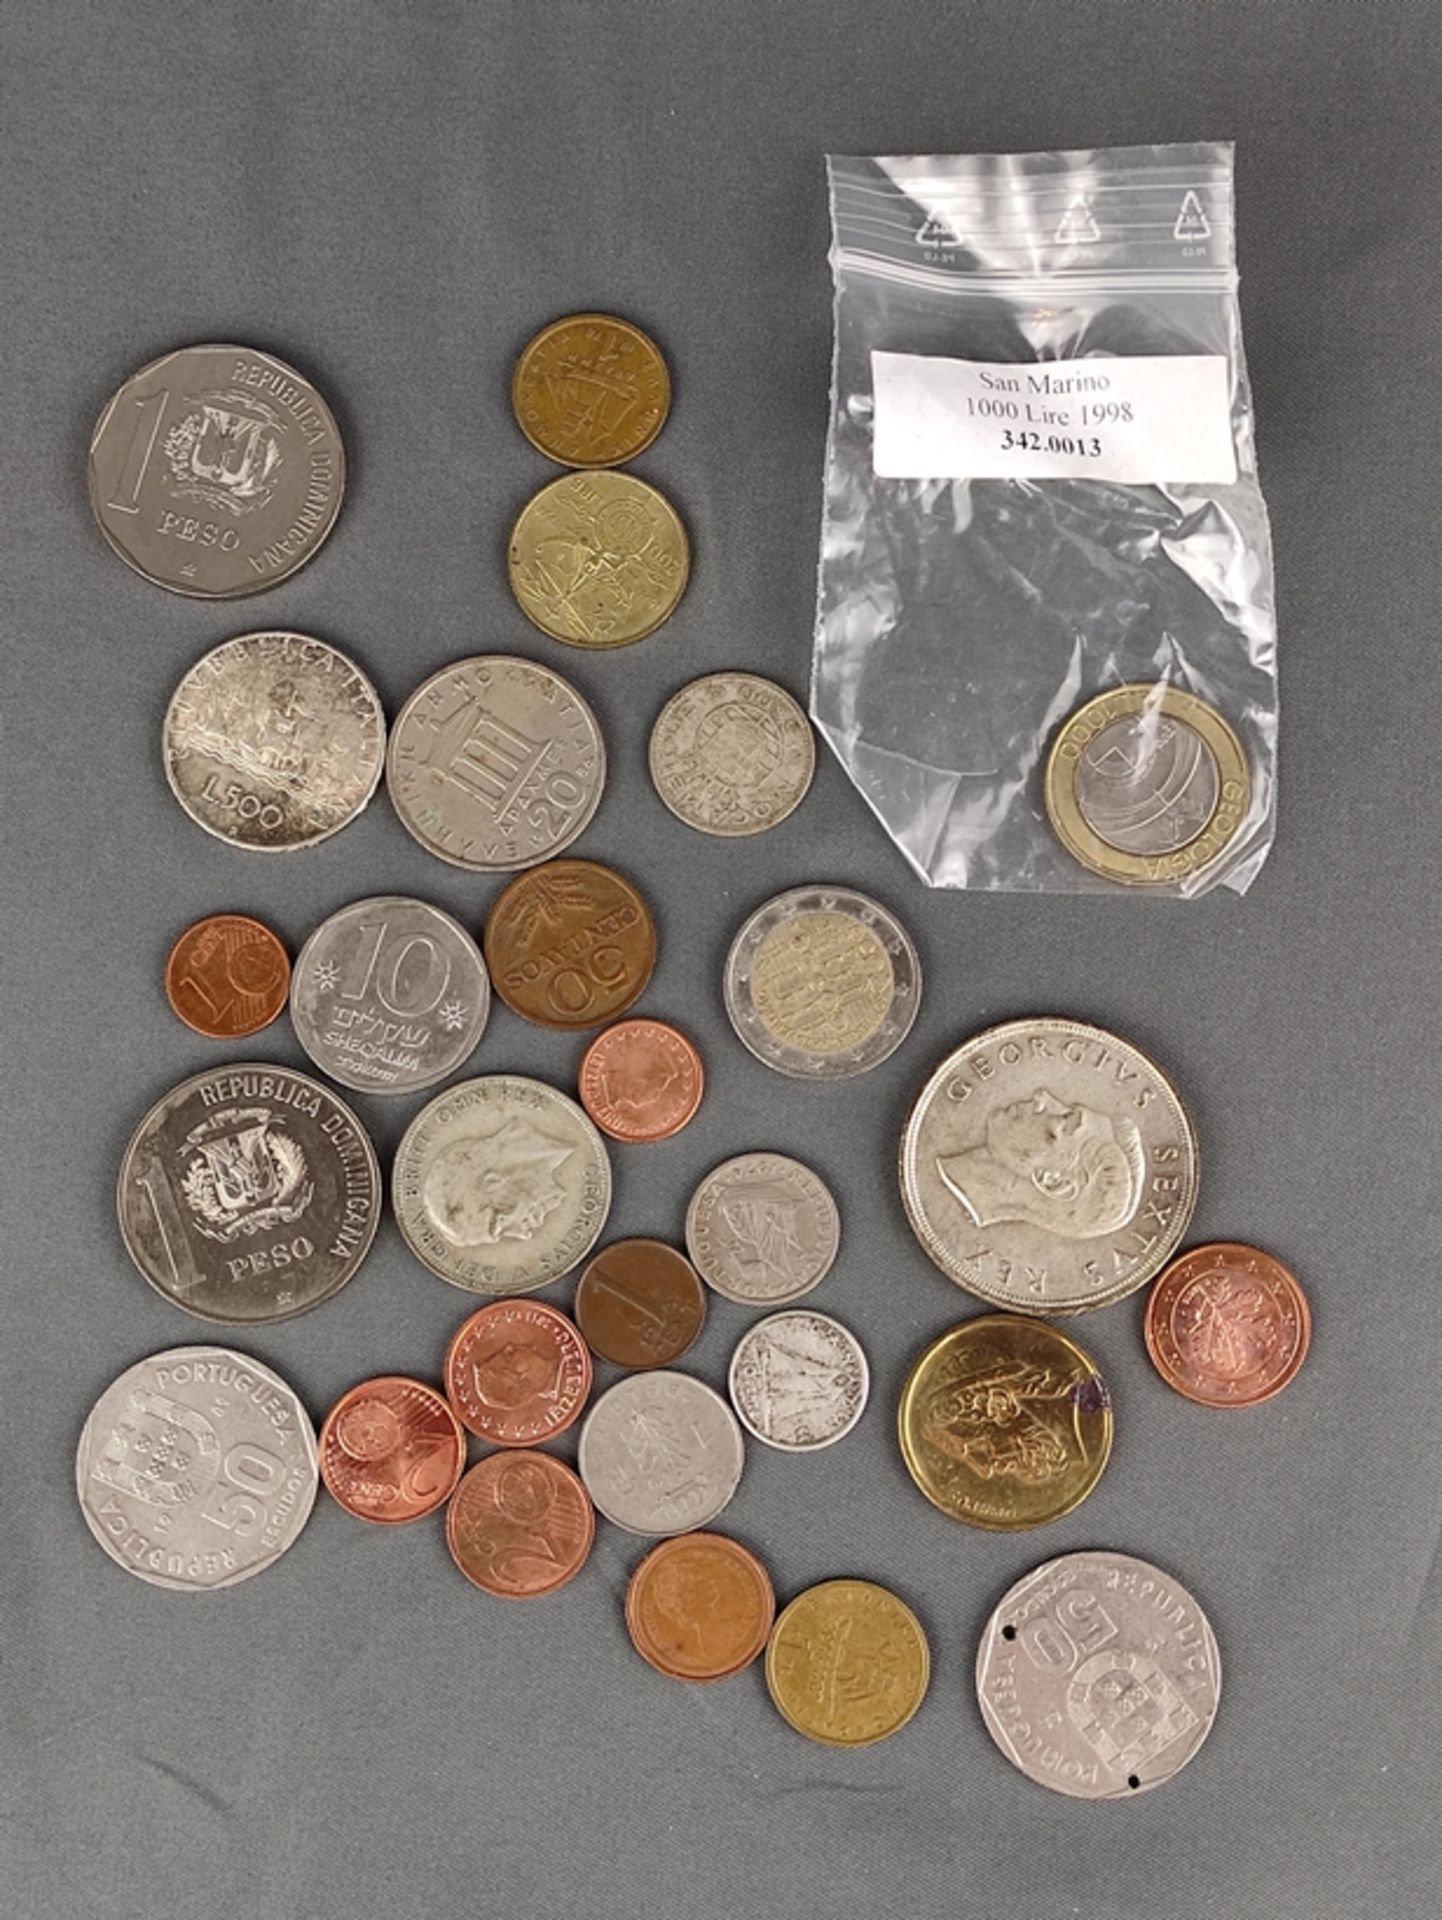 Münz-Konvolut, 27 Münzen, bestehend aus: 1000 Lire, San Marino, 1998, 1 Peso, Dominikanische Republ